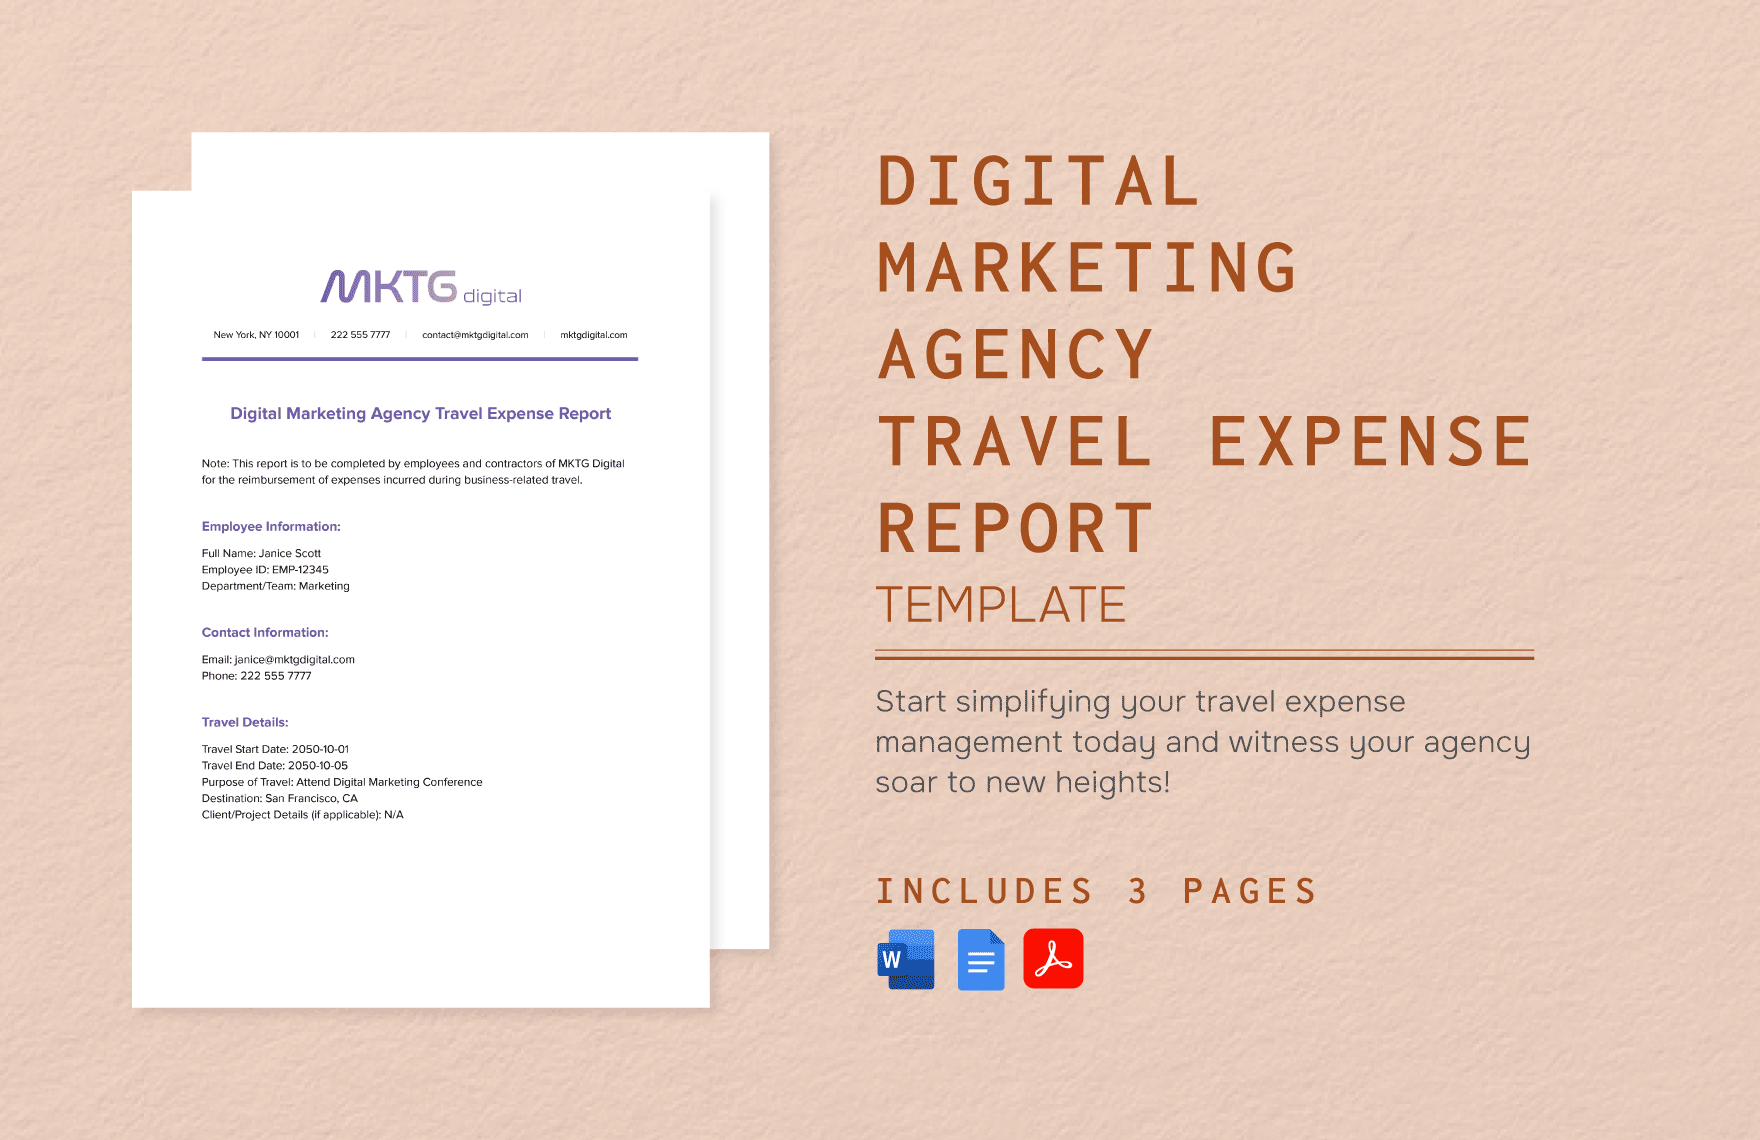 Digital Marketing Agency Travel Expense Report Template